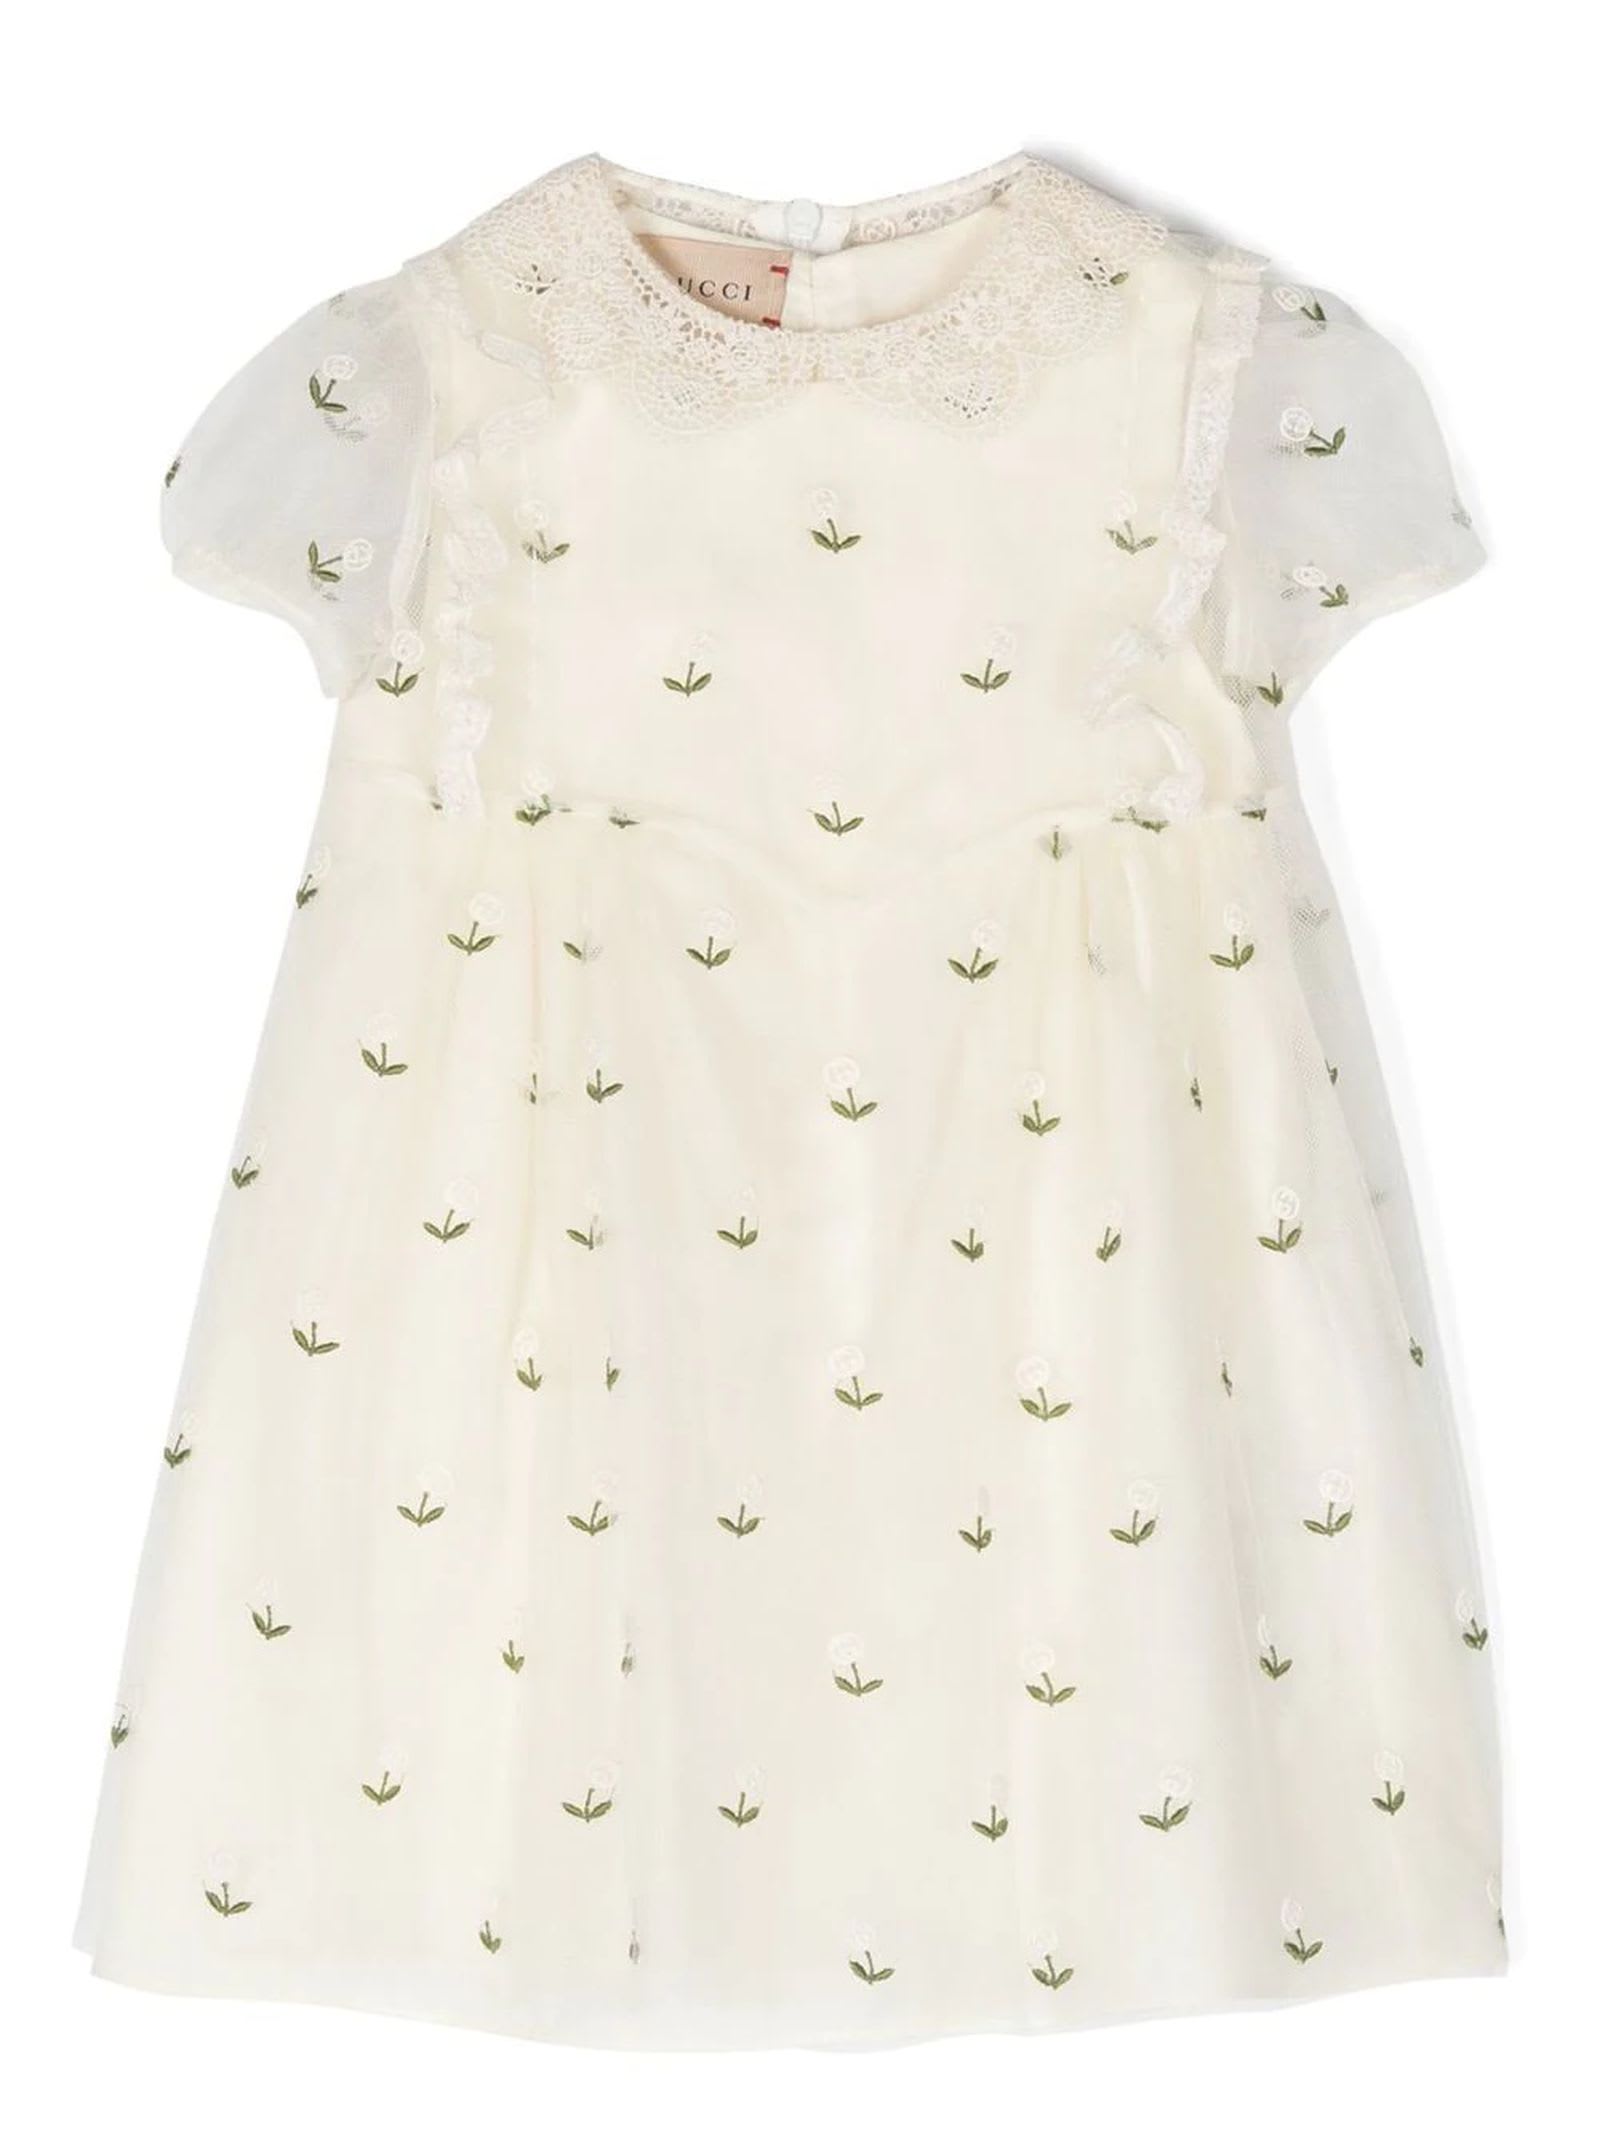 Gucci Babies' Cream White Cotton Blend Dress